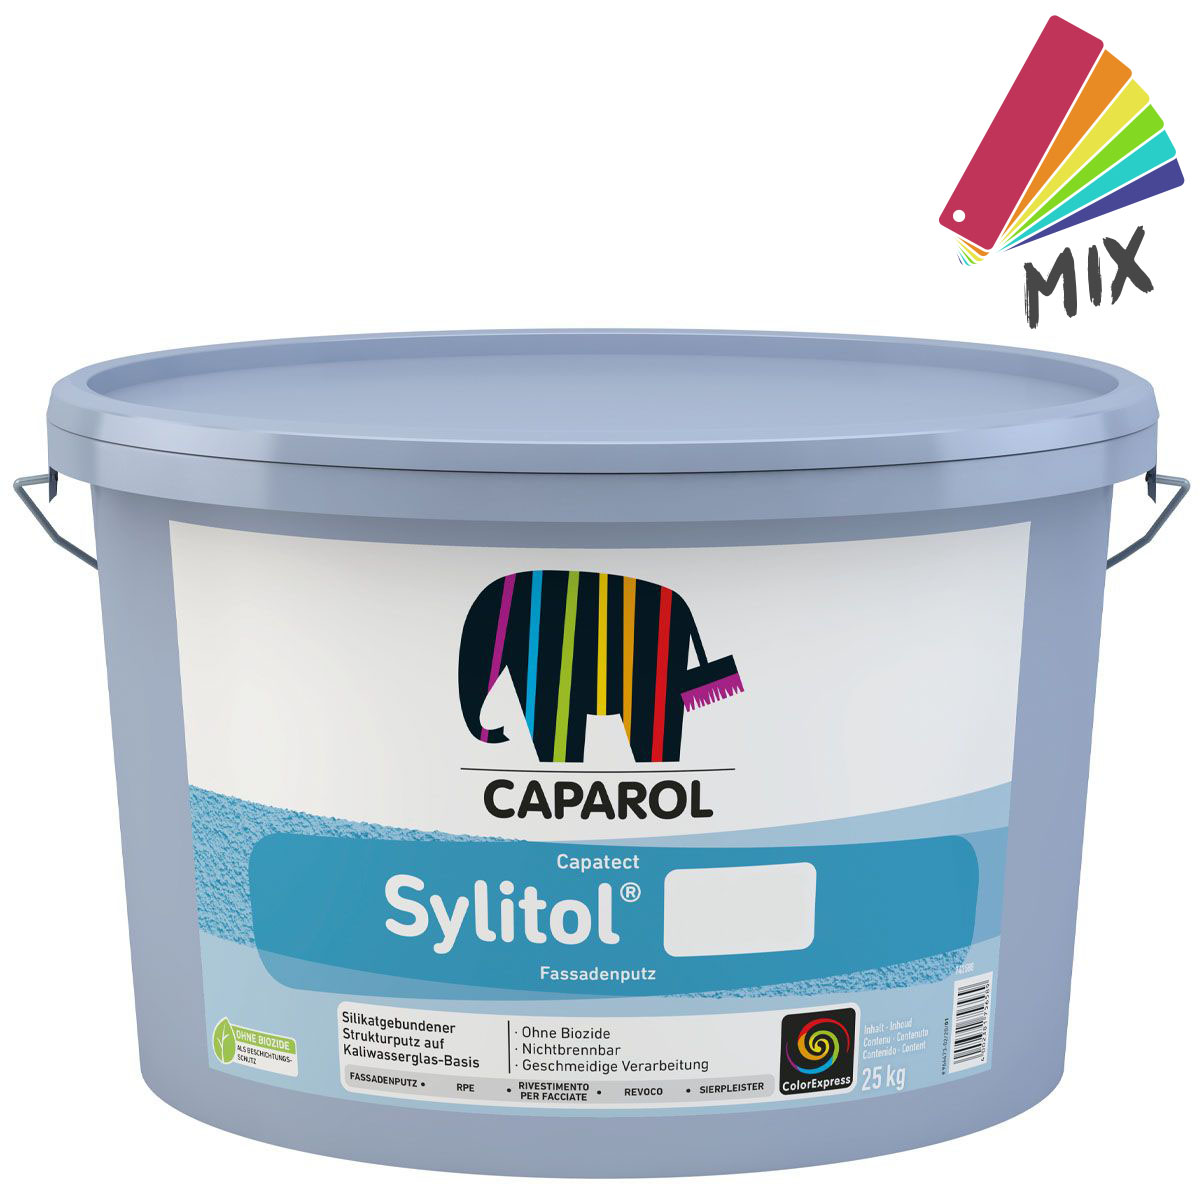 Caparol Capatect Sylitol Fassadenputz K15 (1,5mm) 25kg, PG S wunschfarbton